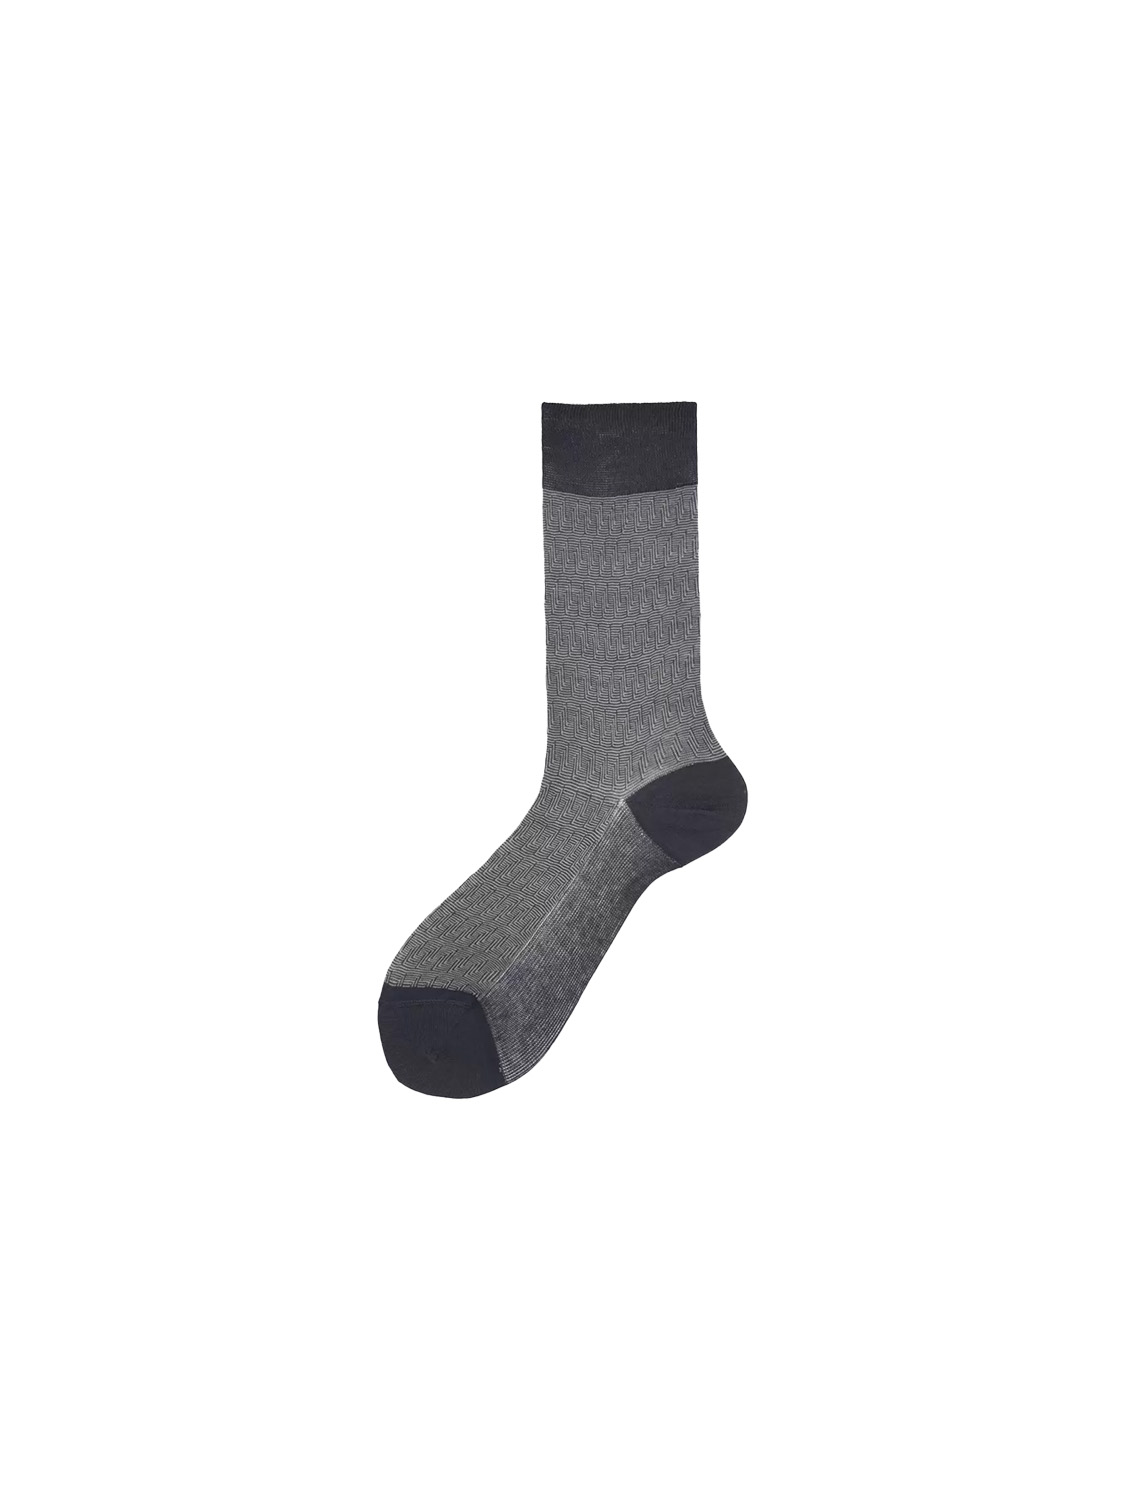 Alto Pyne – Kurze Baumwoll-Socken mit gestreiftem Muster   grau Taille unique